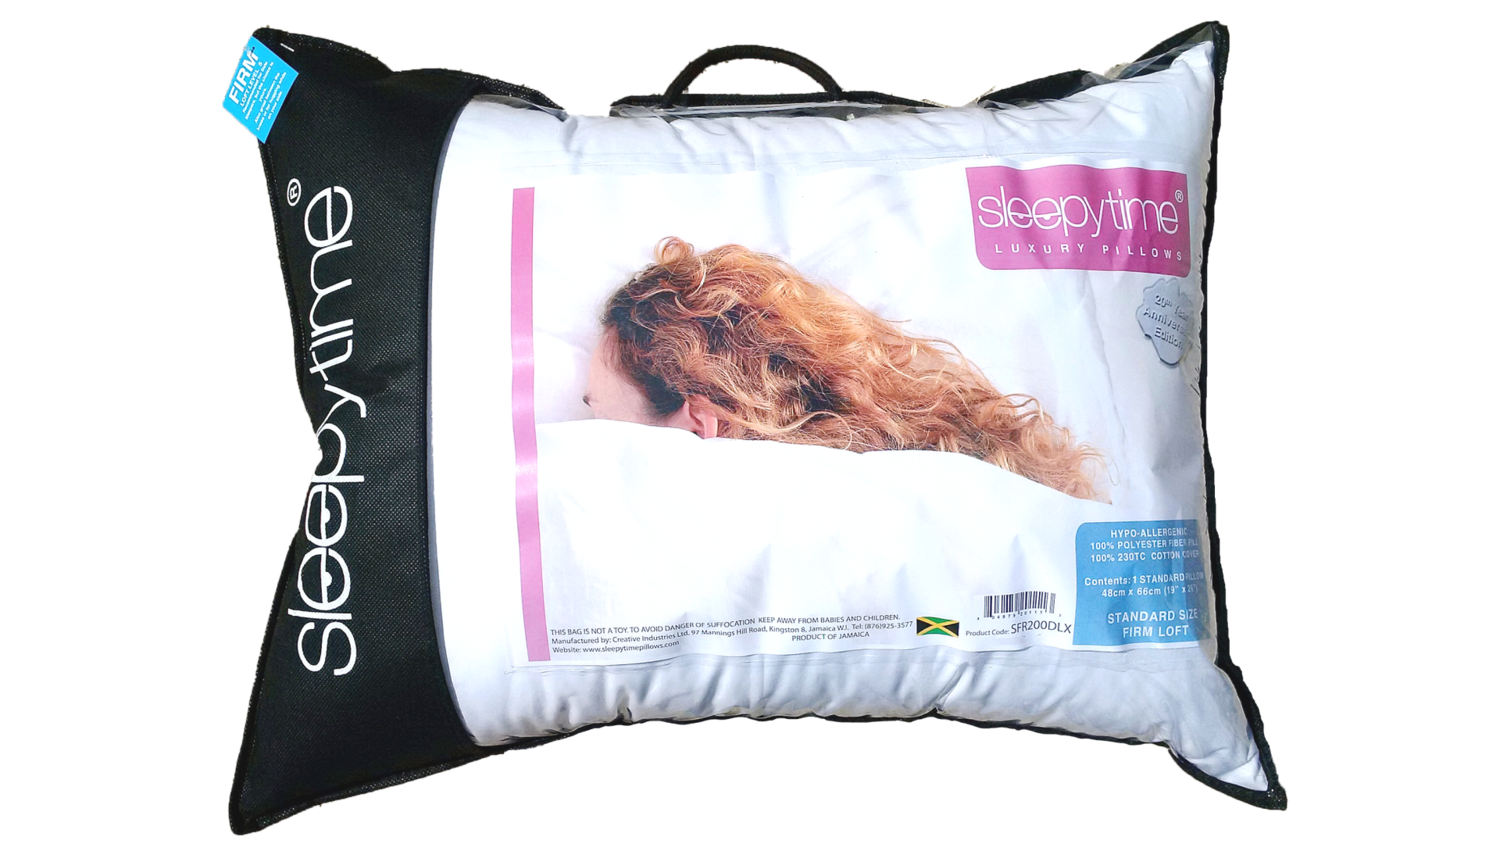 Sleepytime Regal Deluxe Pillows - Standard Size